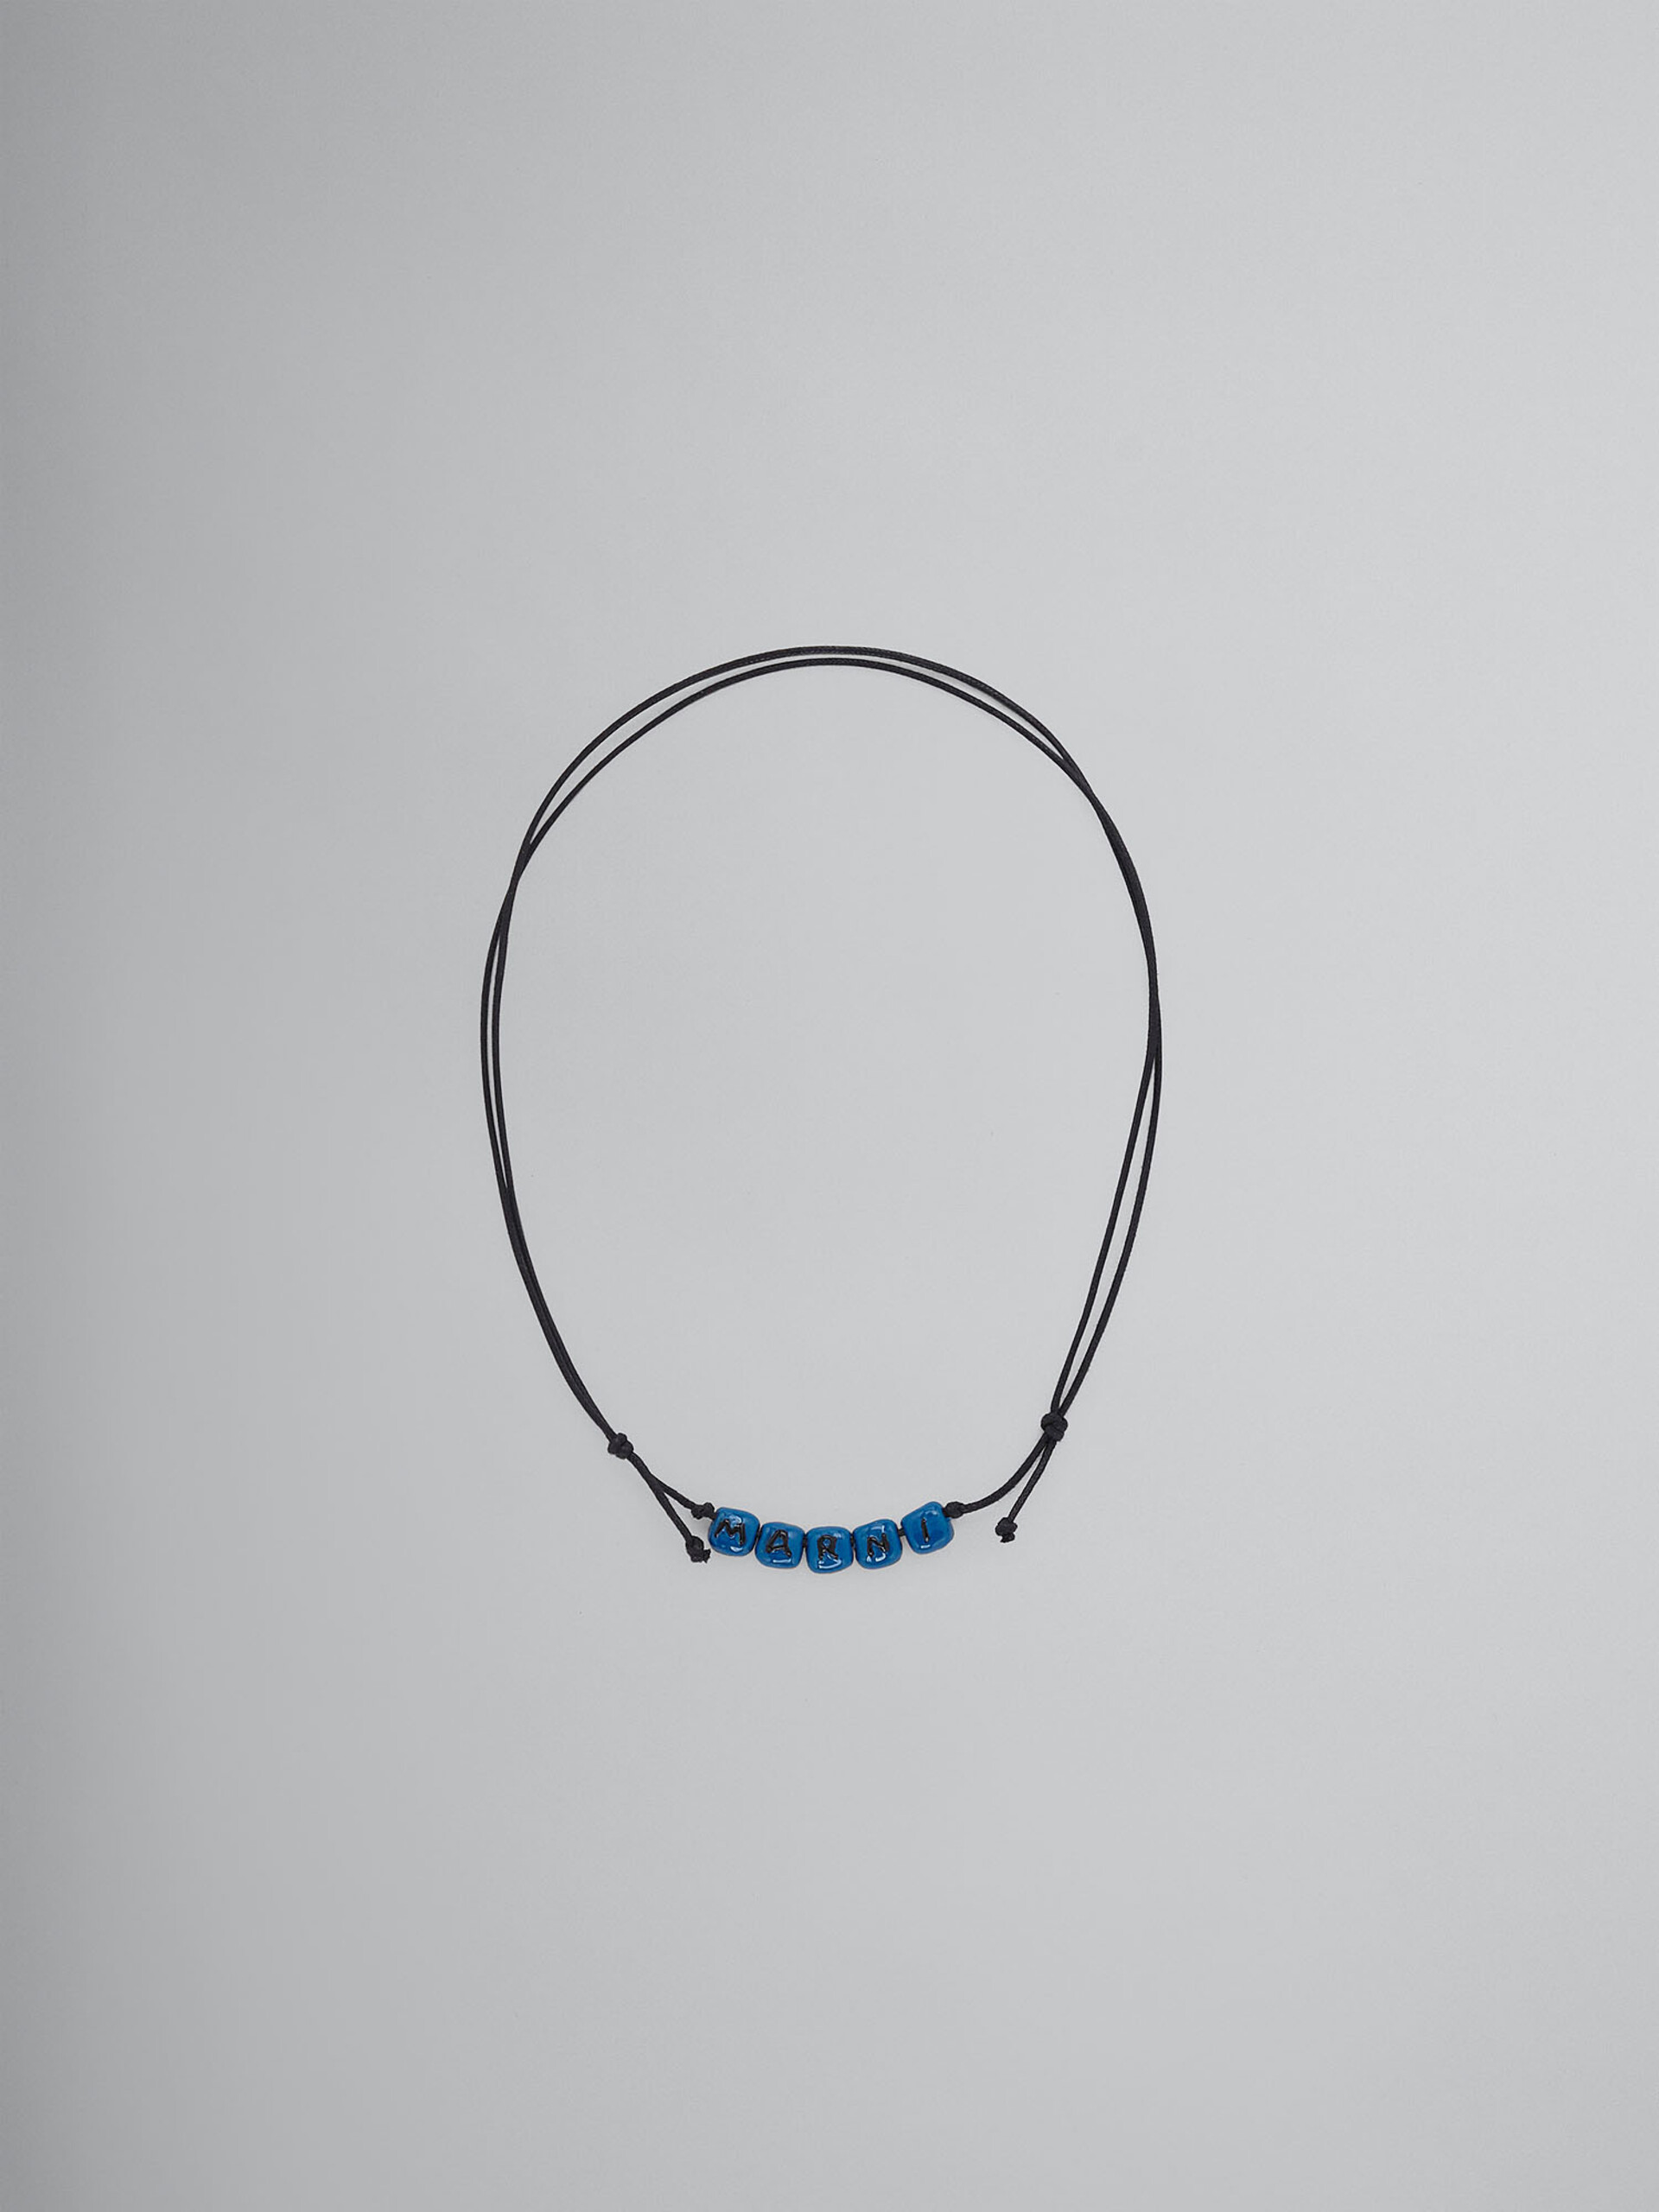 Collier bleu avec logo - Colliers - Image 1